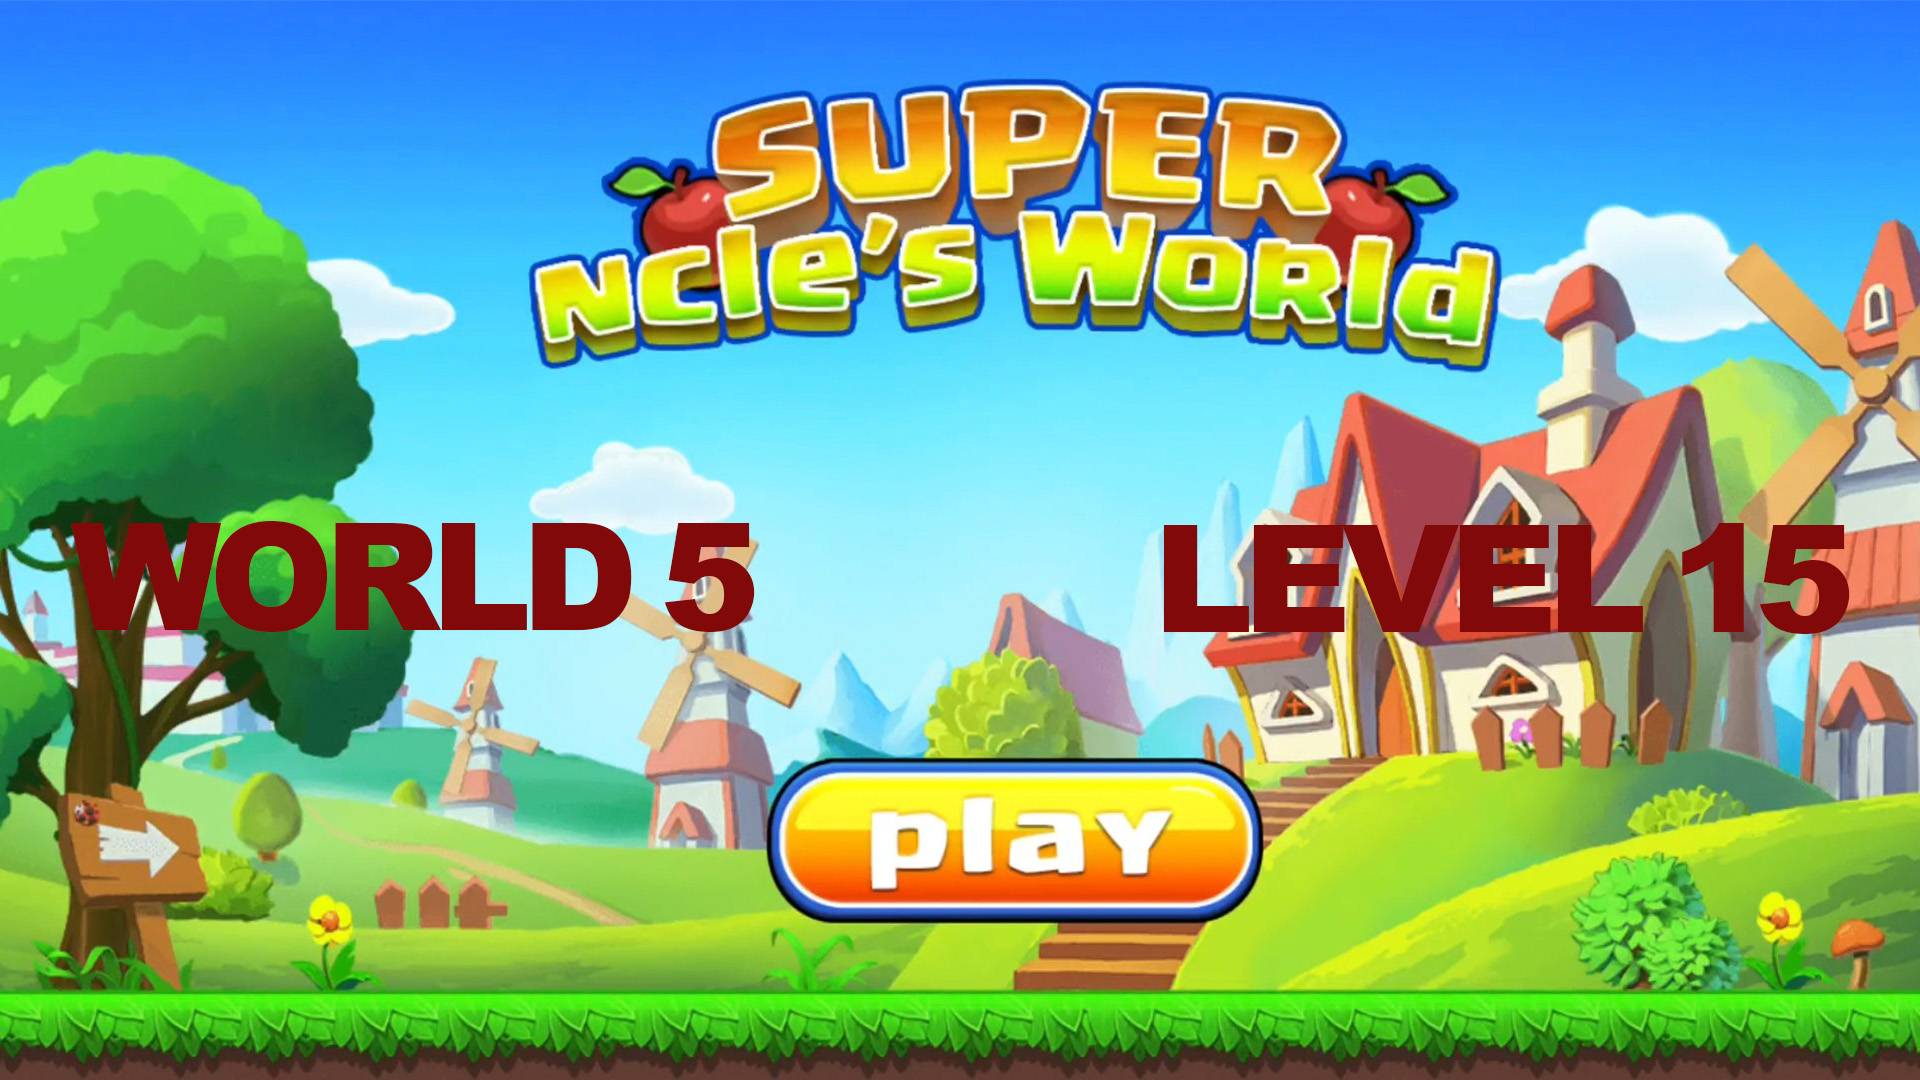 Super ncle's  World 5. Level 15.